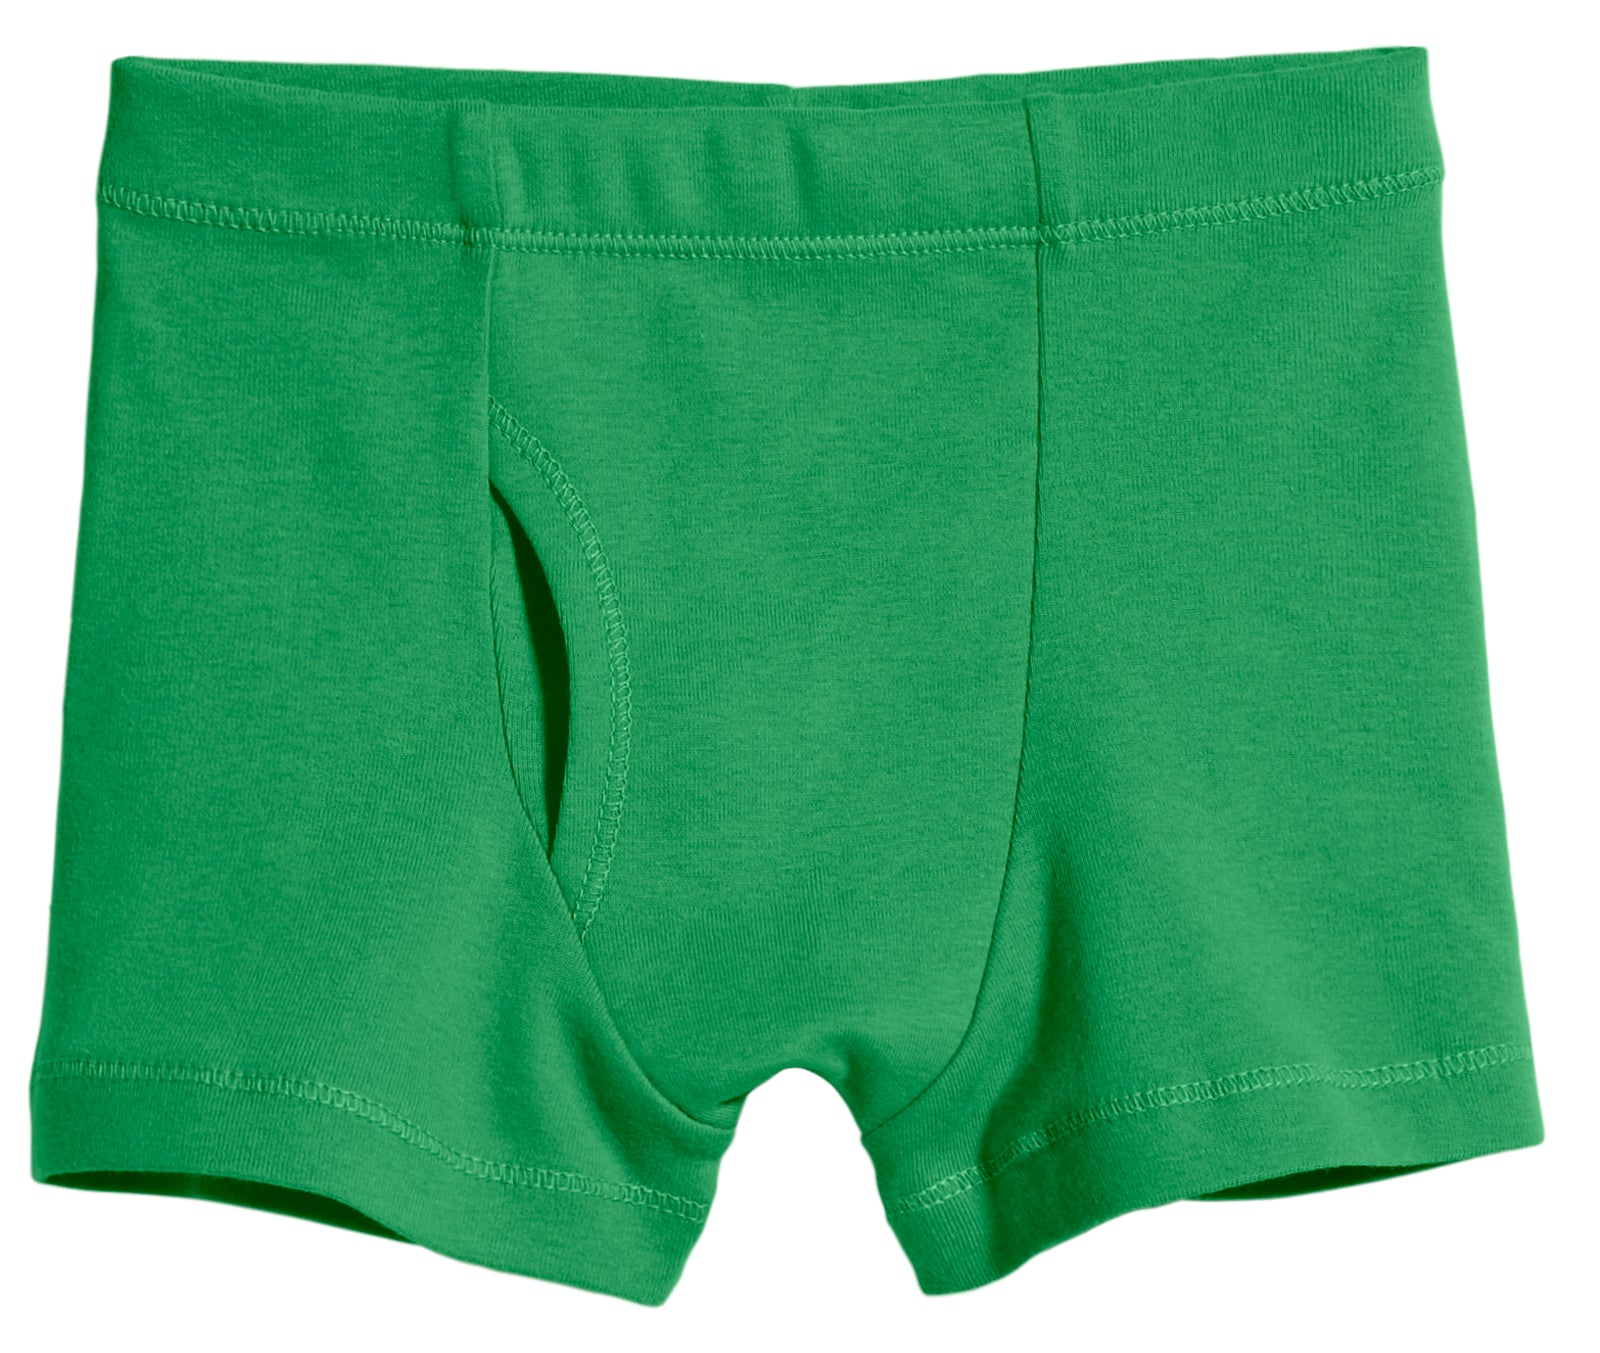 Hanes Boxer Briefs Underwear Toddler Boys 2T 3T Unboxing Pre